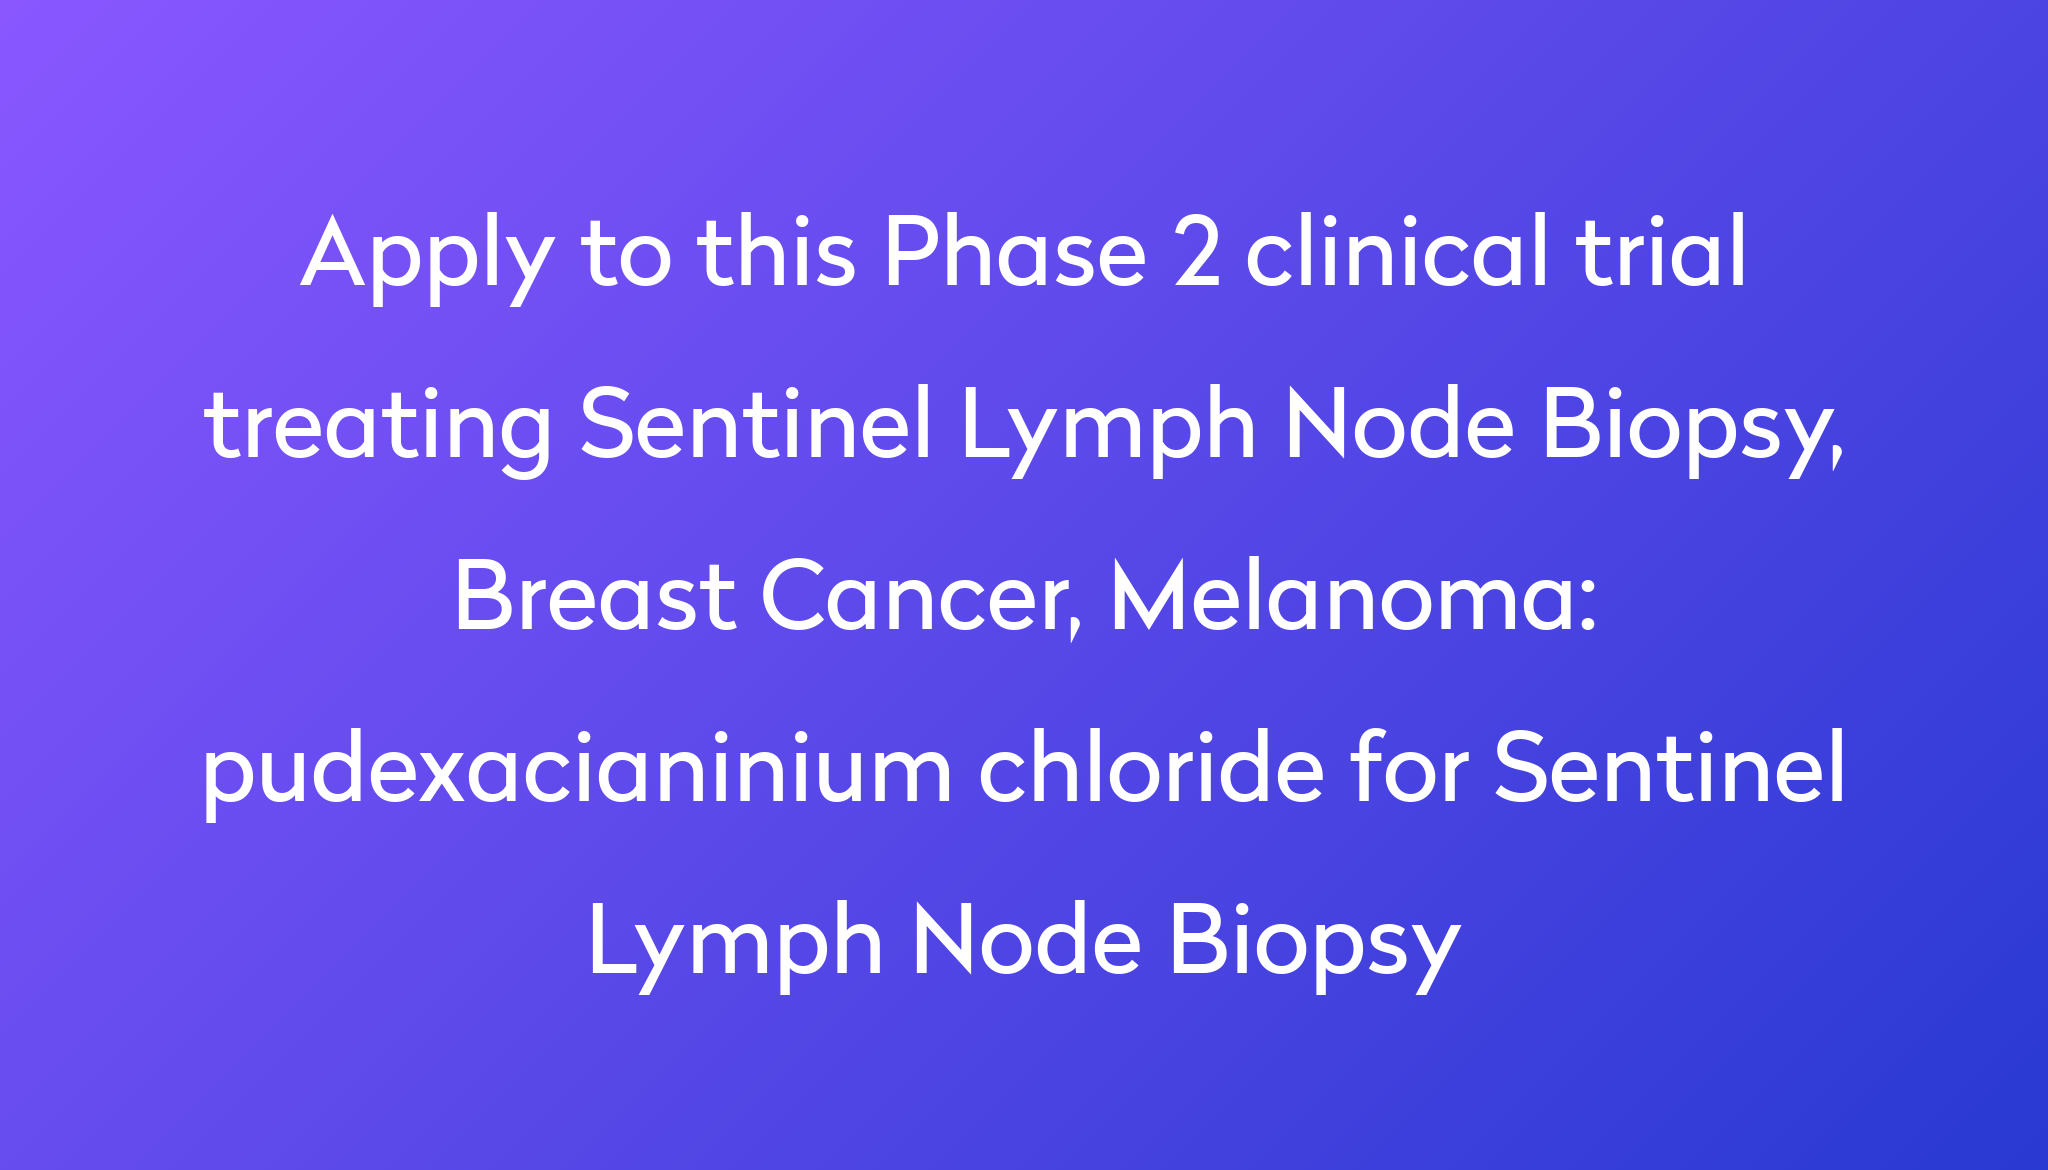 Pudexacianinium Chloride For Sentinel Lymph Node Biopsy Clinical Trial